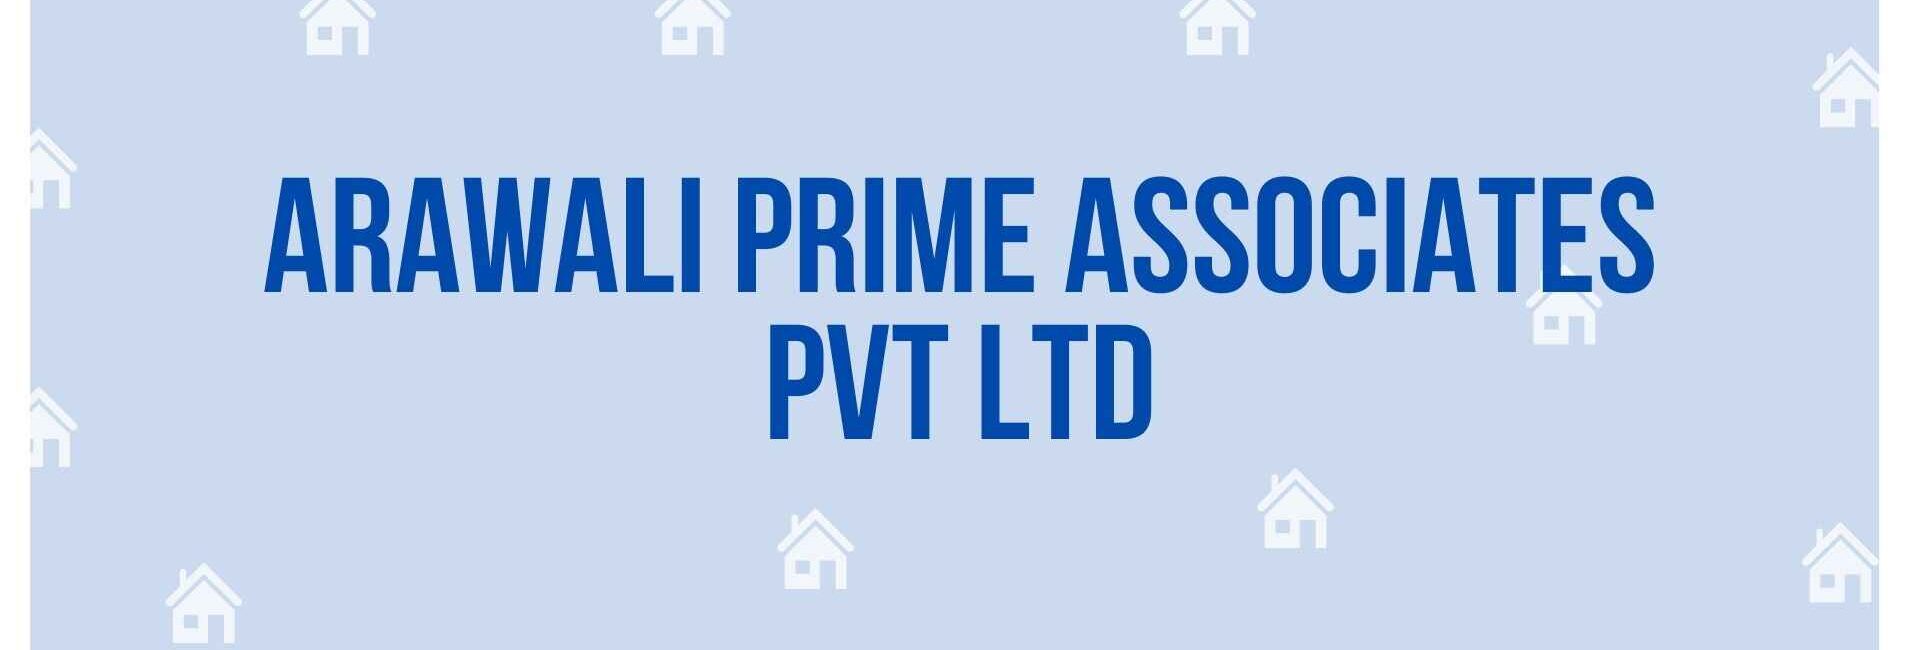 Arawali Prime Associates Pvt Ltd - Property Dealer in Noida